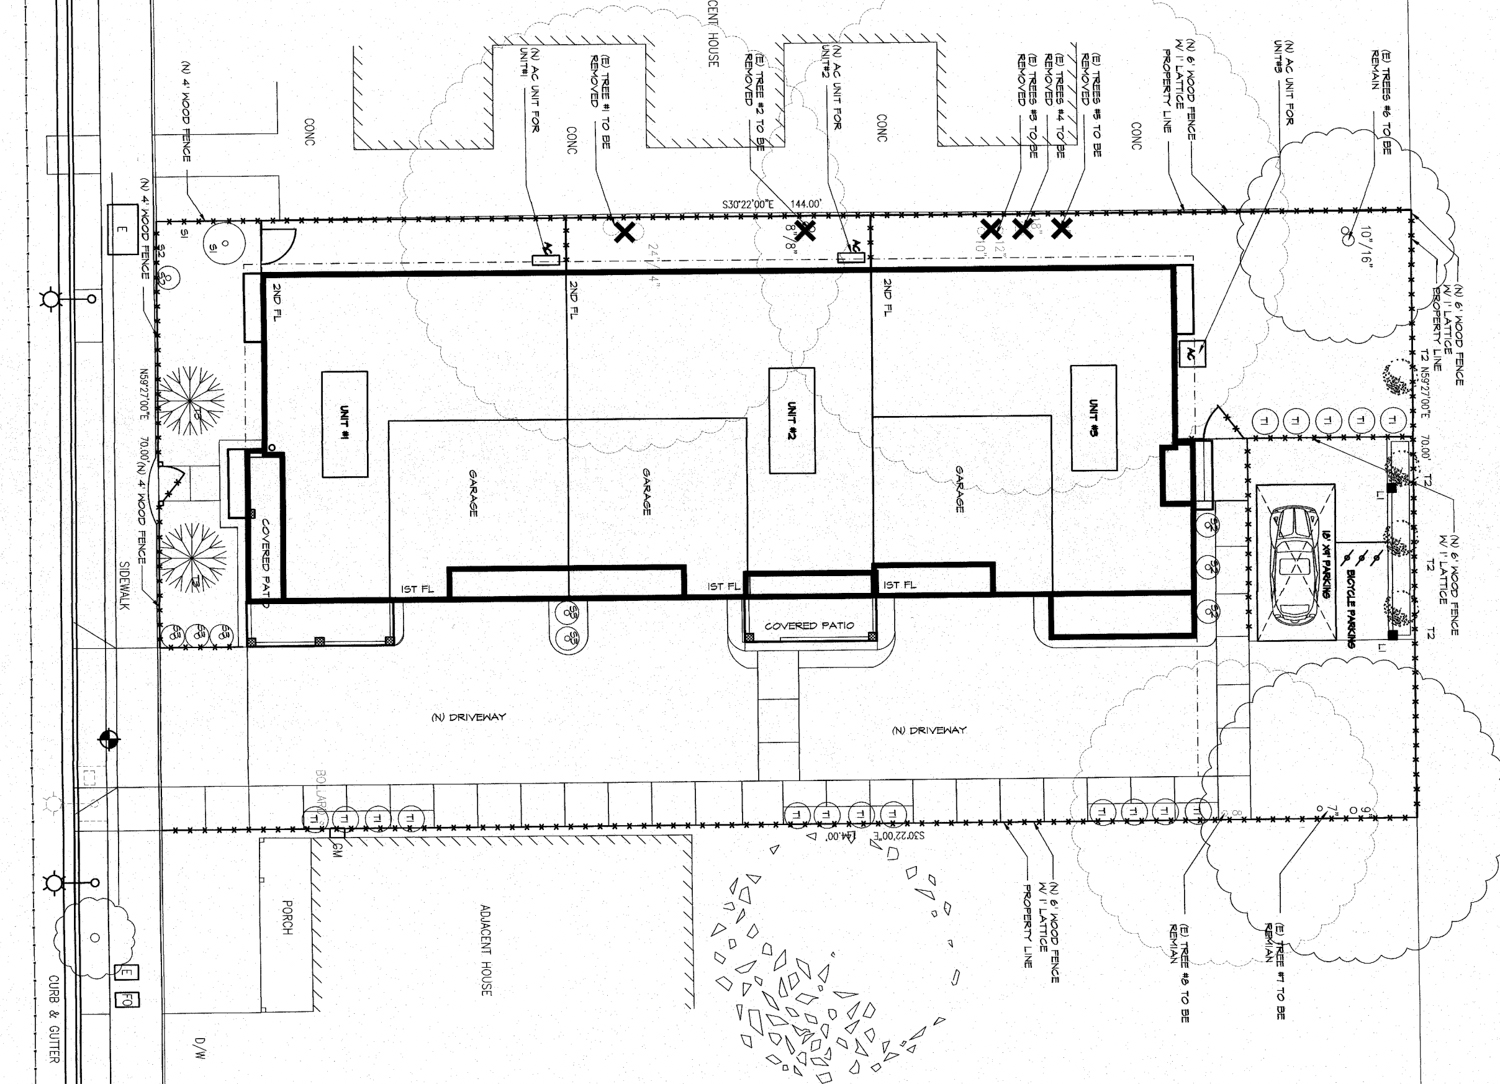 123 West Reed Street floor plan, elevation by LEL Design Group